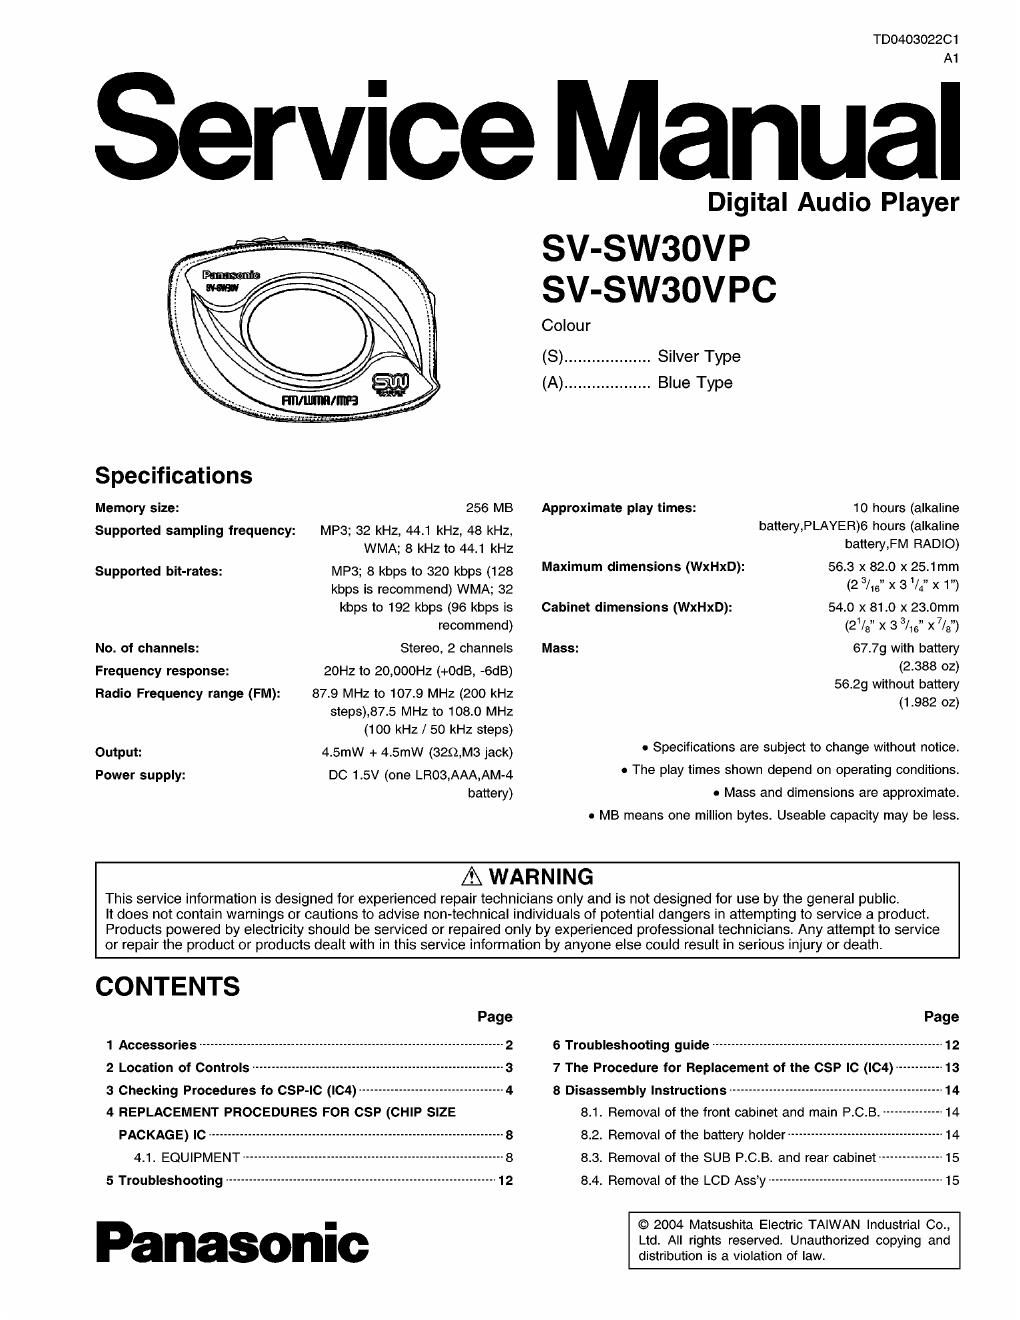 panasonic sv sw 30 vp service manual